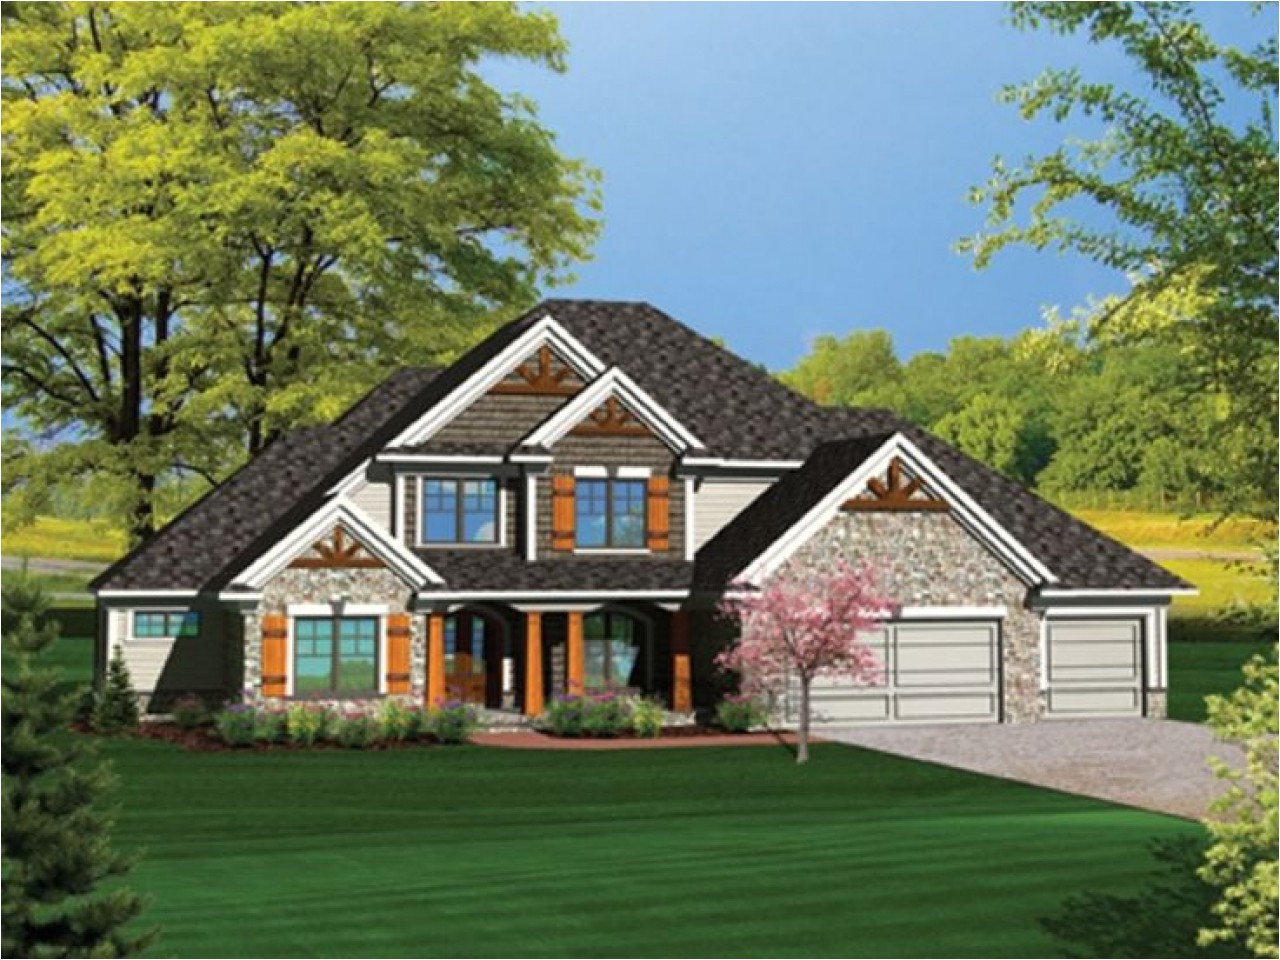 60477524f542ef6d craftsman cottage style house plans eplans craftsman house plan